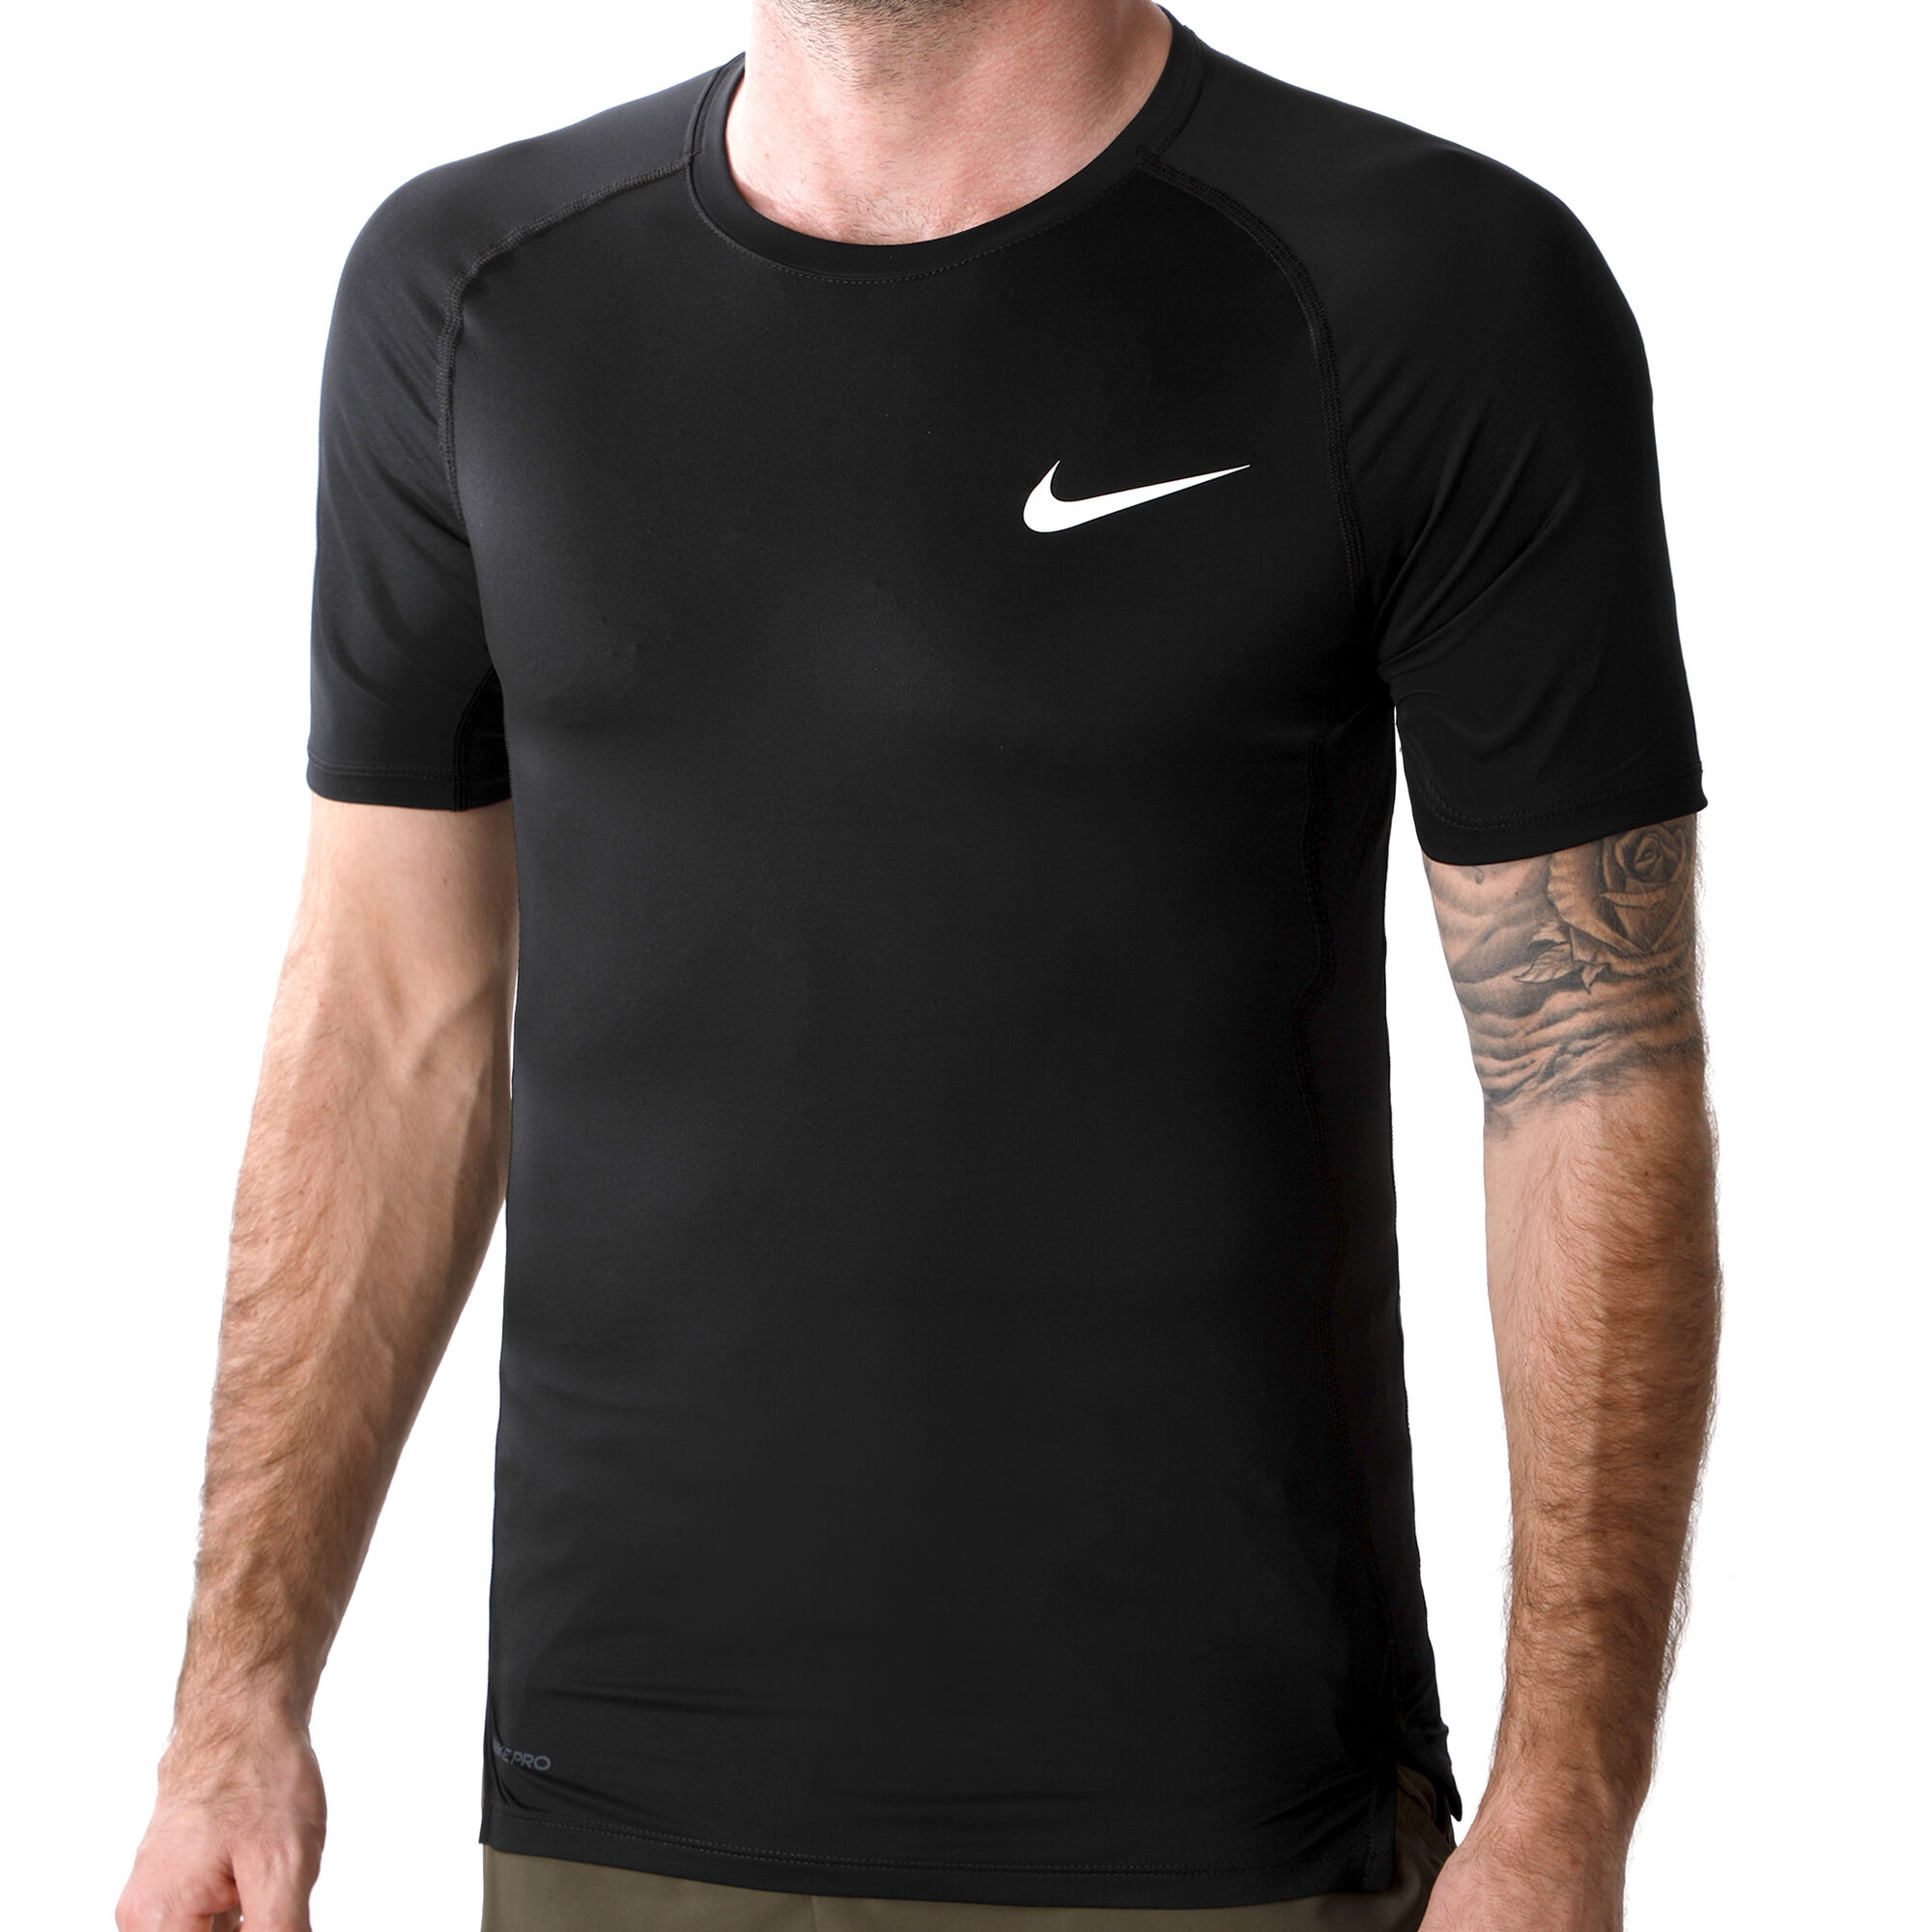 buy Nike Pro T-Shirt Men - Black, White online | Tennis-Point